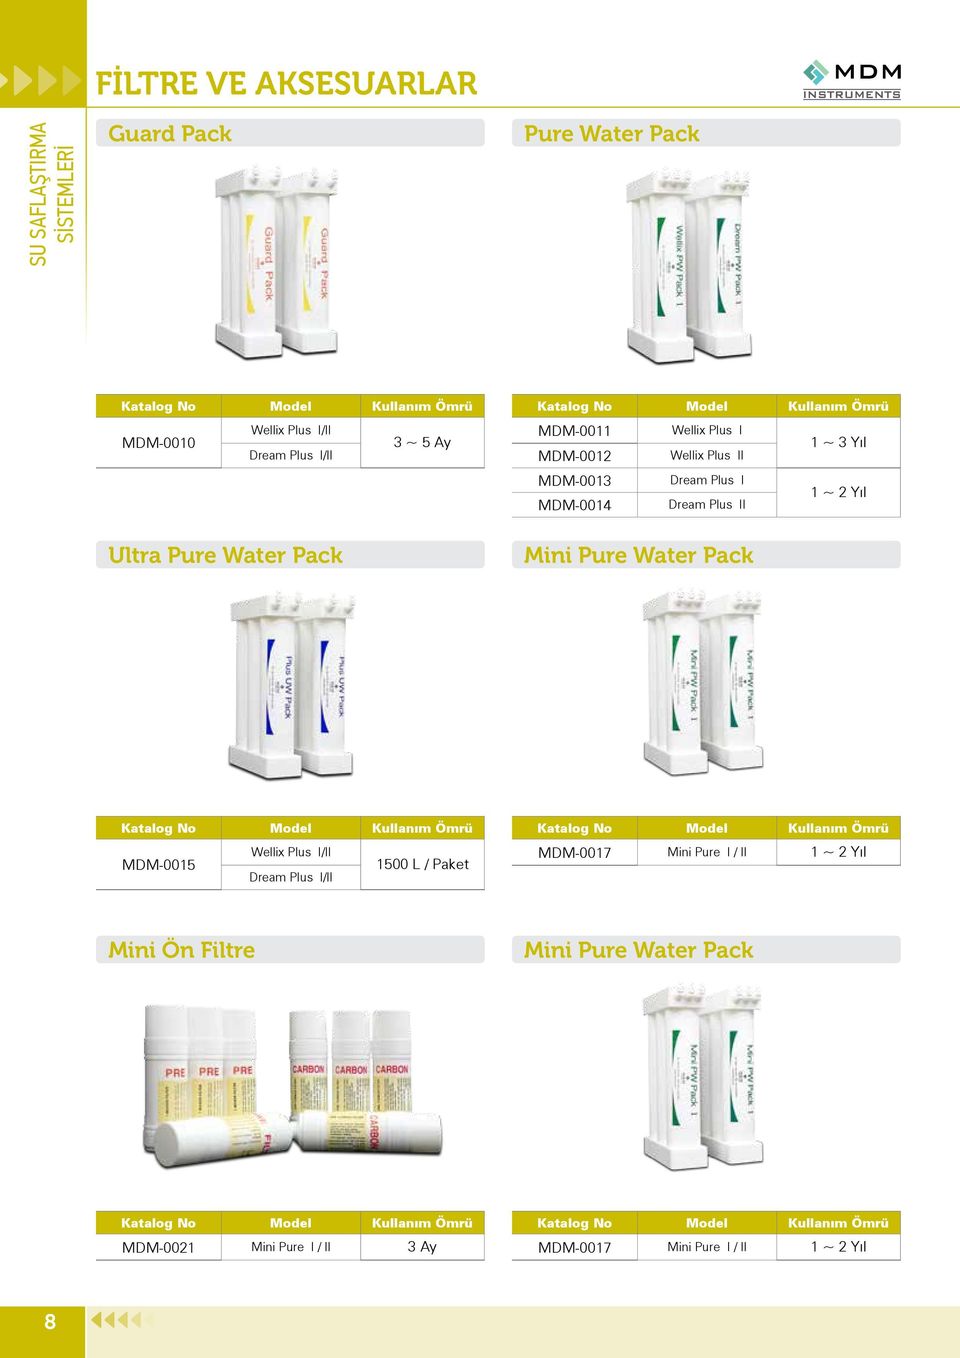 Pure Water Pack Mini Pure Water Pack MDM-0015 Wellix Plus I/II 1500 L / Paket Dream Plus I/II MDM-0017 Mini Pure